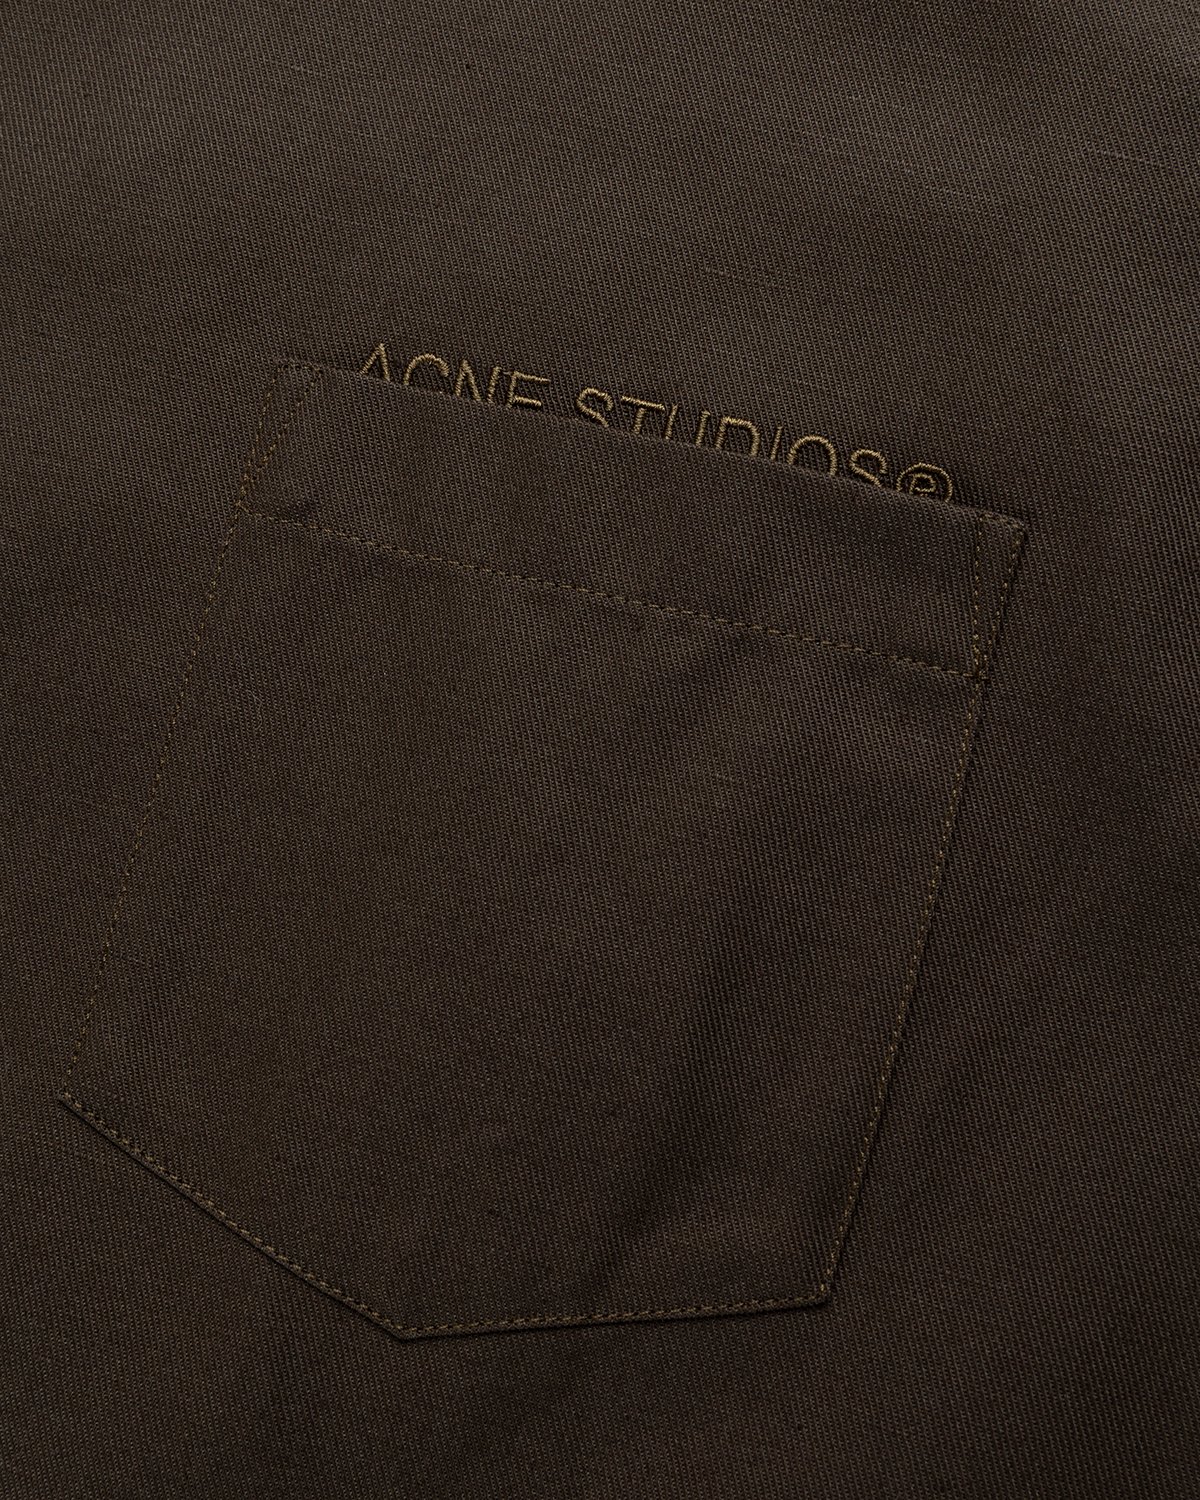 Acne Studios - Linen Blend Button-Up Shirt Dark Olive - Clothing - Green - Image 3